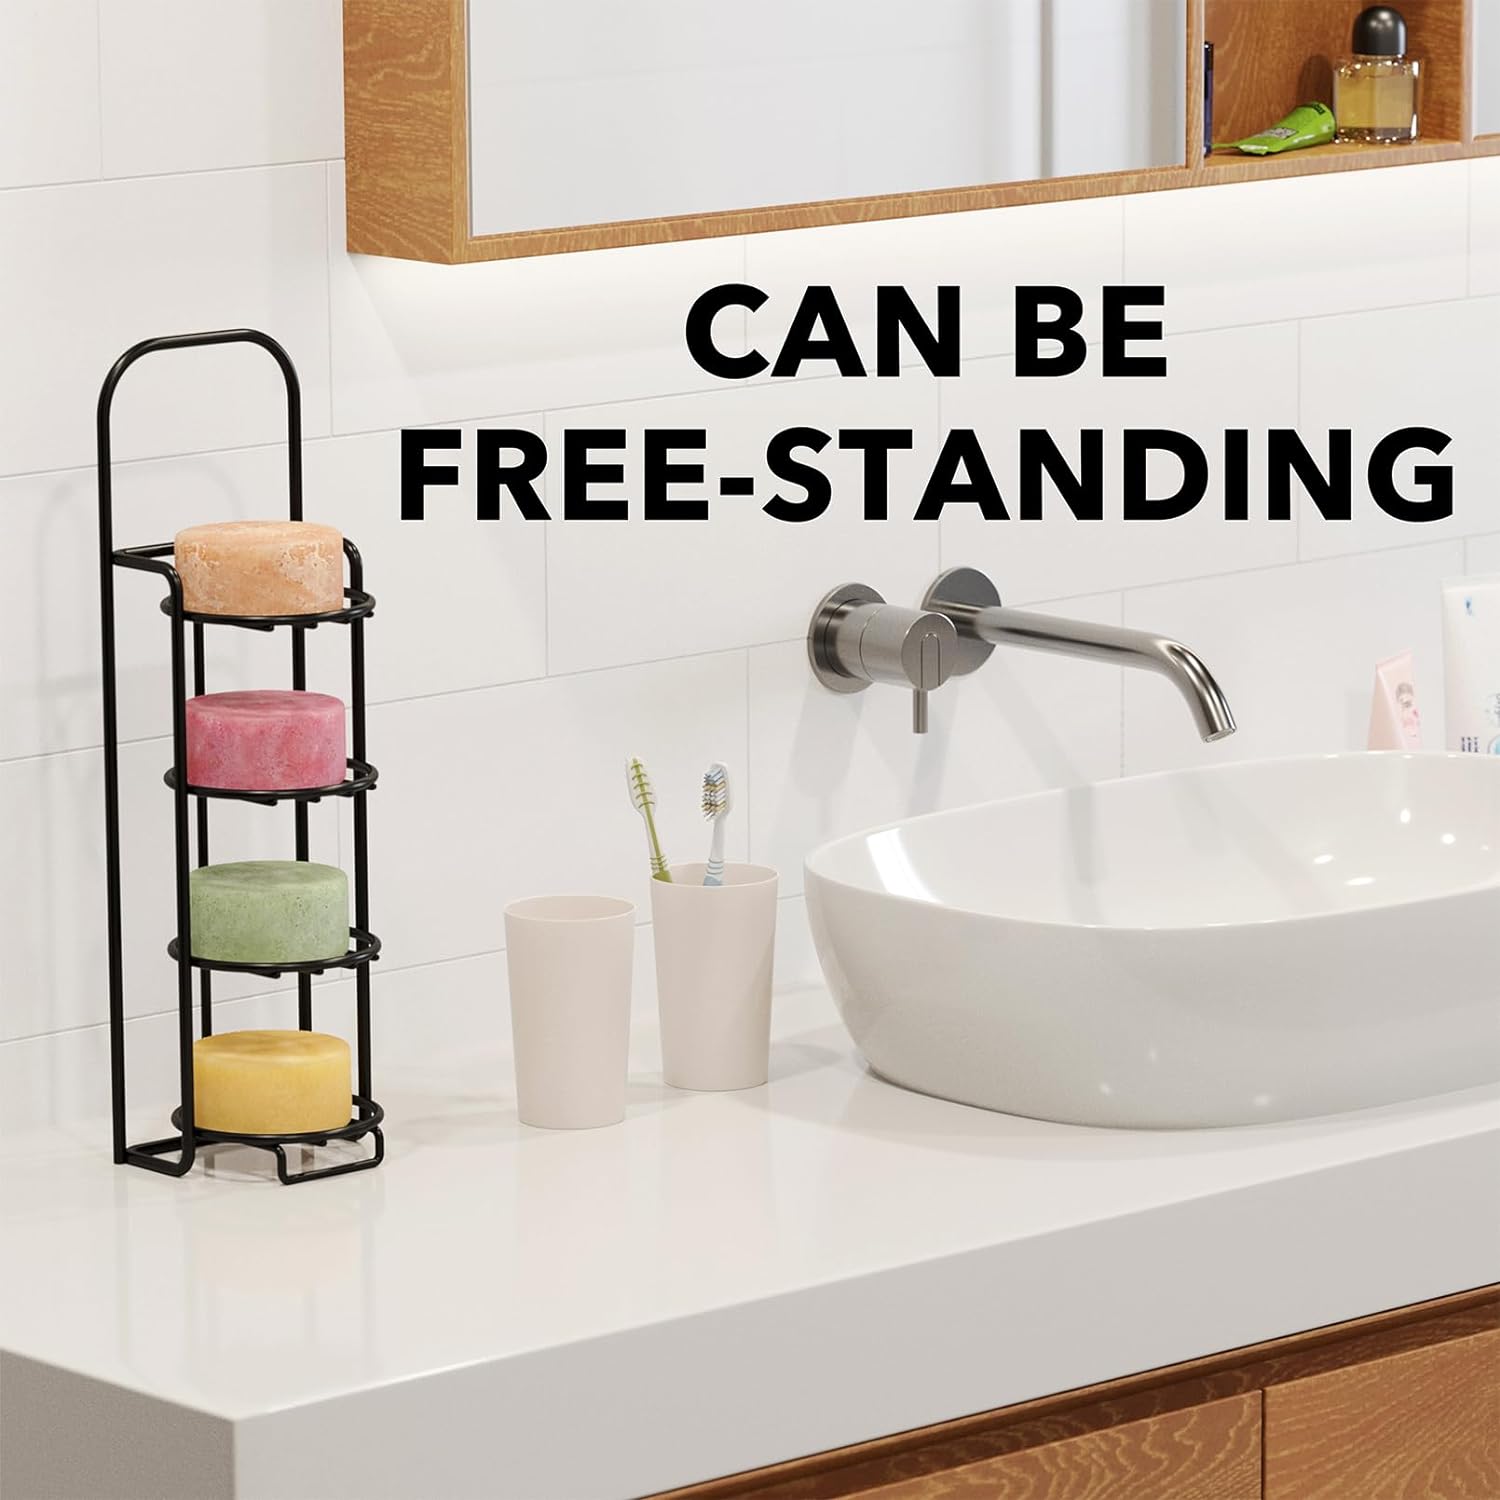 SpaceAid 4 Tier Shampoo Bar Holder for Shower, Self Draining Soap Bar Holders Caddy for Bathroom Wall and Kitchen Sink, Shampoo Bar Dish Rack